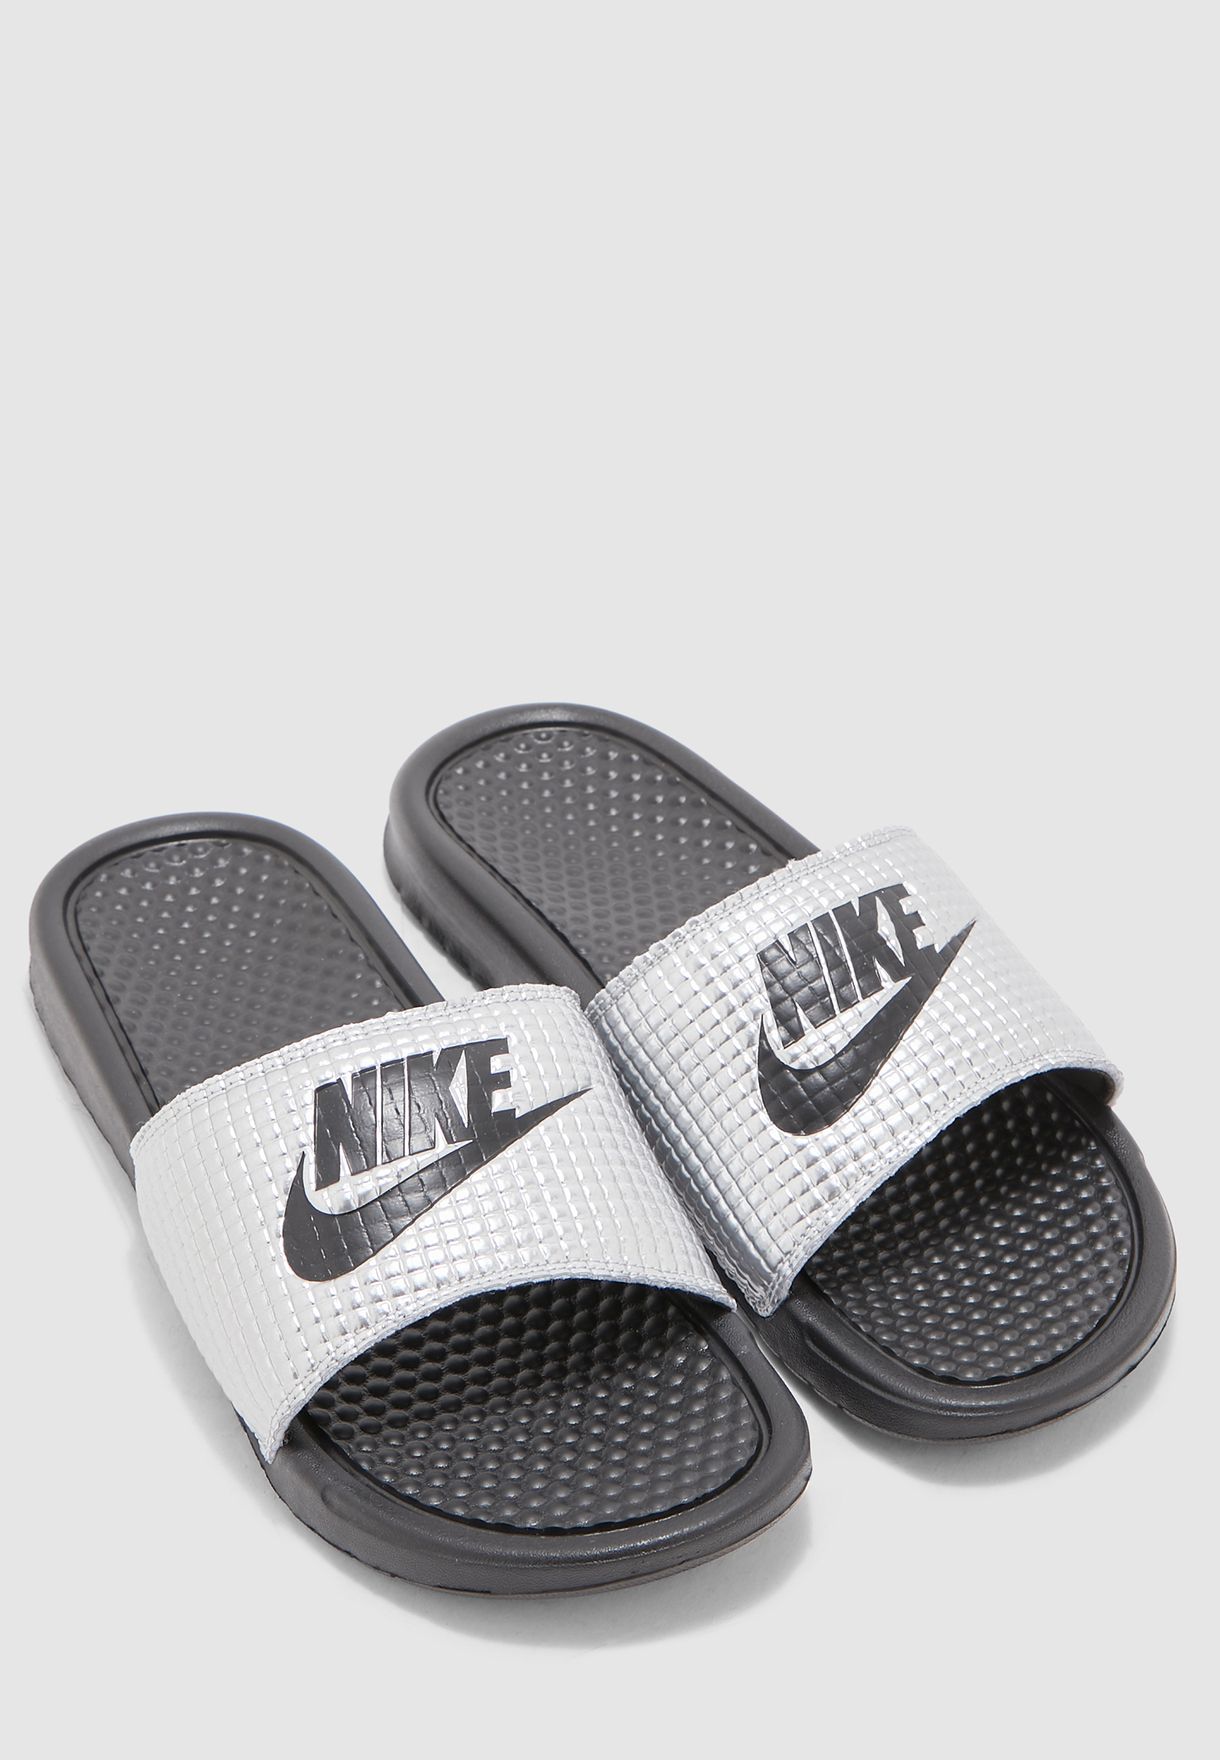 where can i buy nike sandals